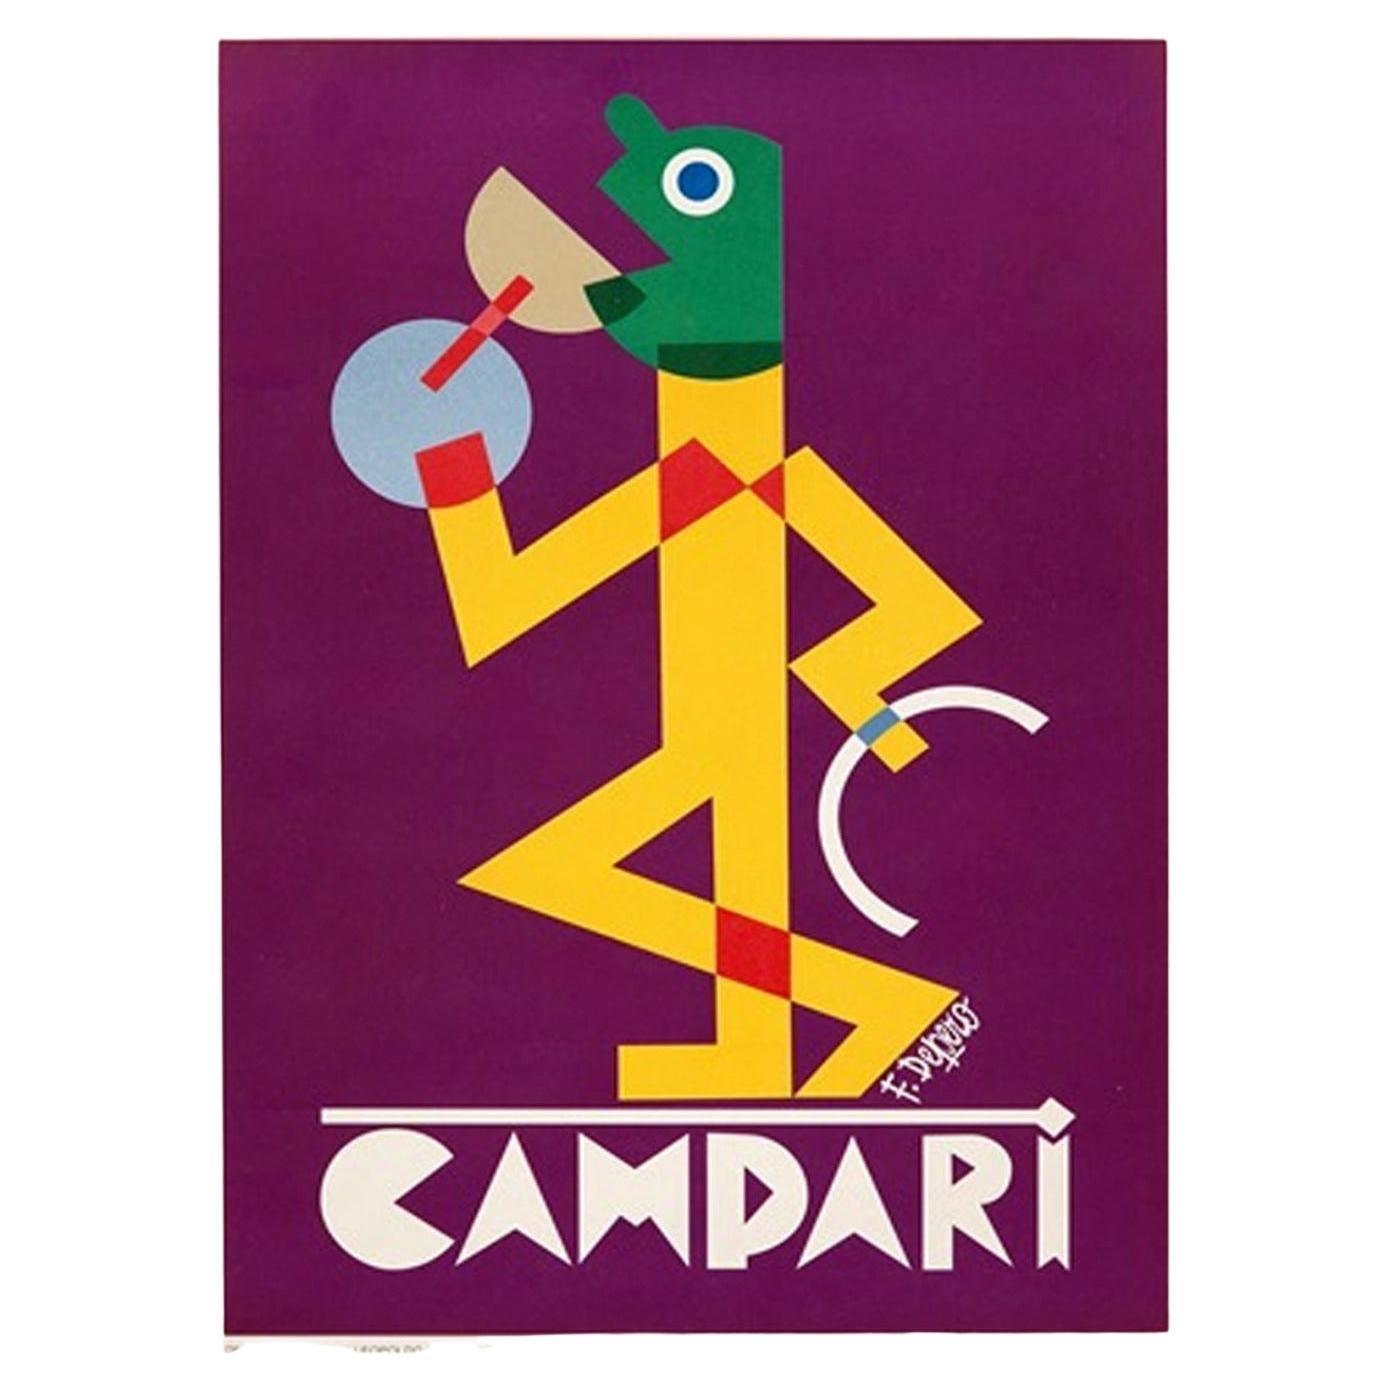 1928 Campari Viola, Fortunato Depero Original Vintage Poster